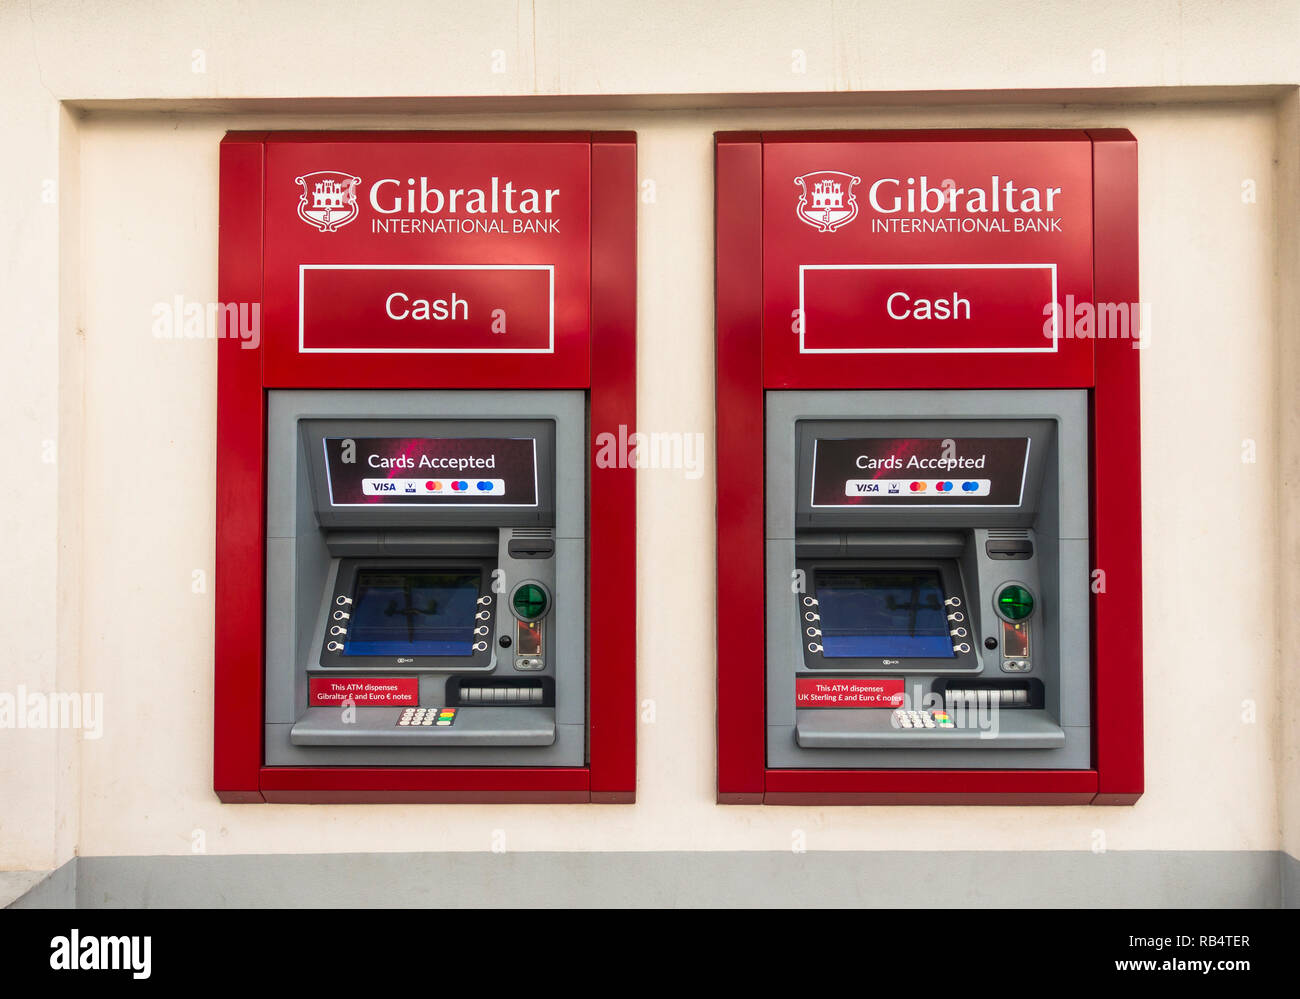 Gibraltar International Bank, Atm Cash dispenser, Gibraltar, British Overseas Territory, UK. Stock Photo